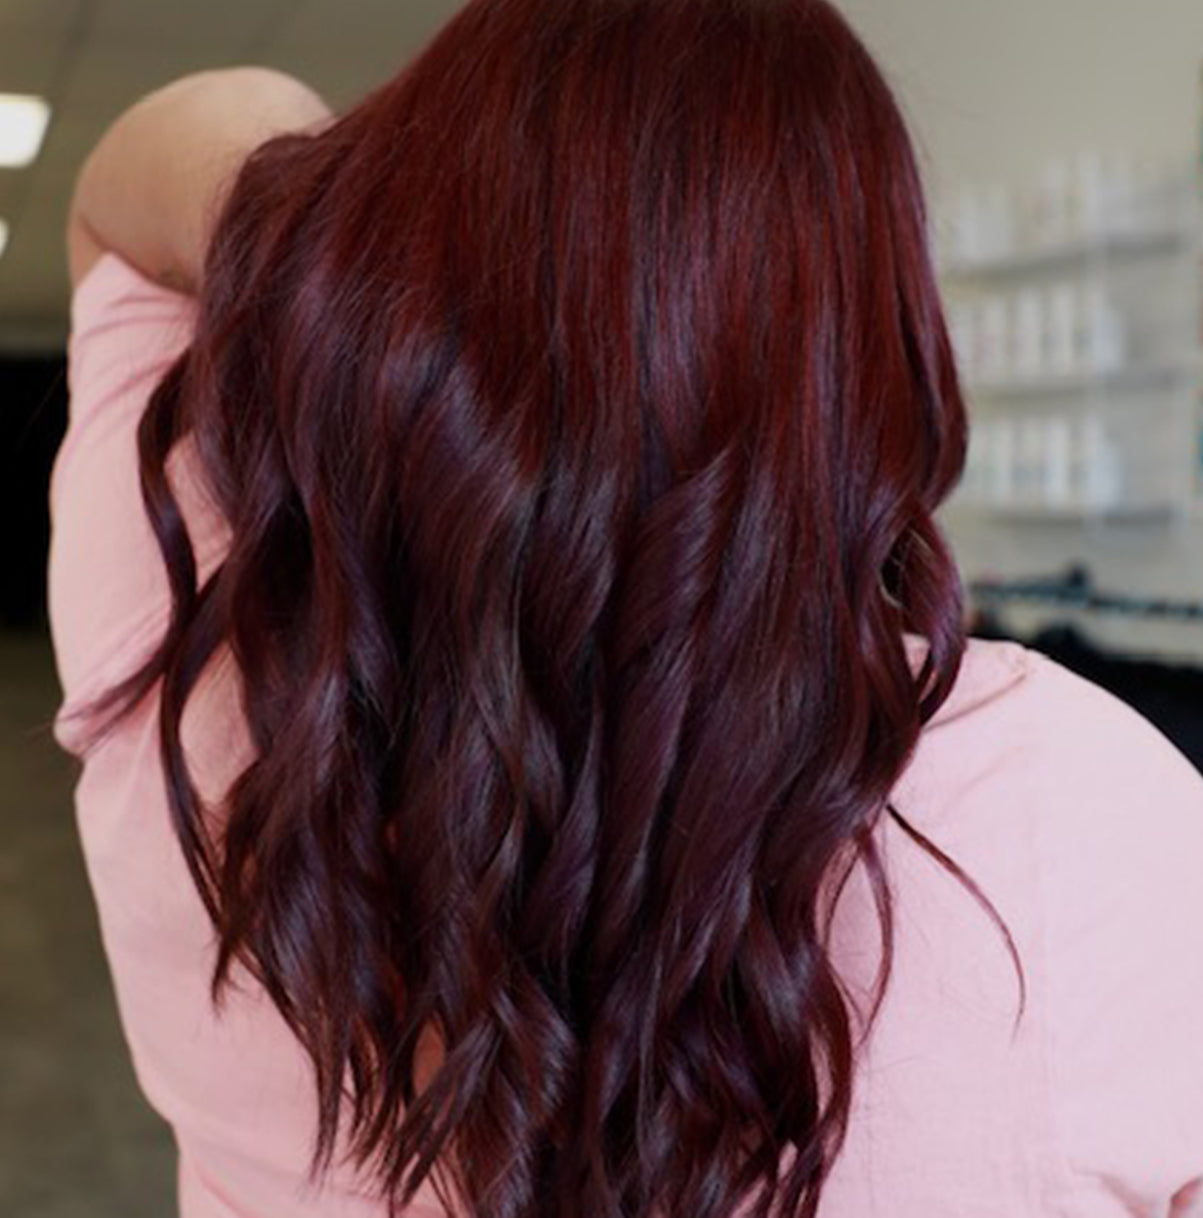 Color + Clenditioner for Brunettes – Keracolor hair